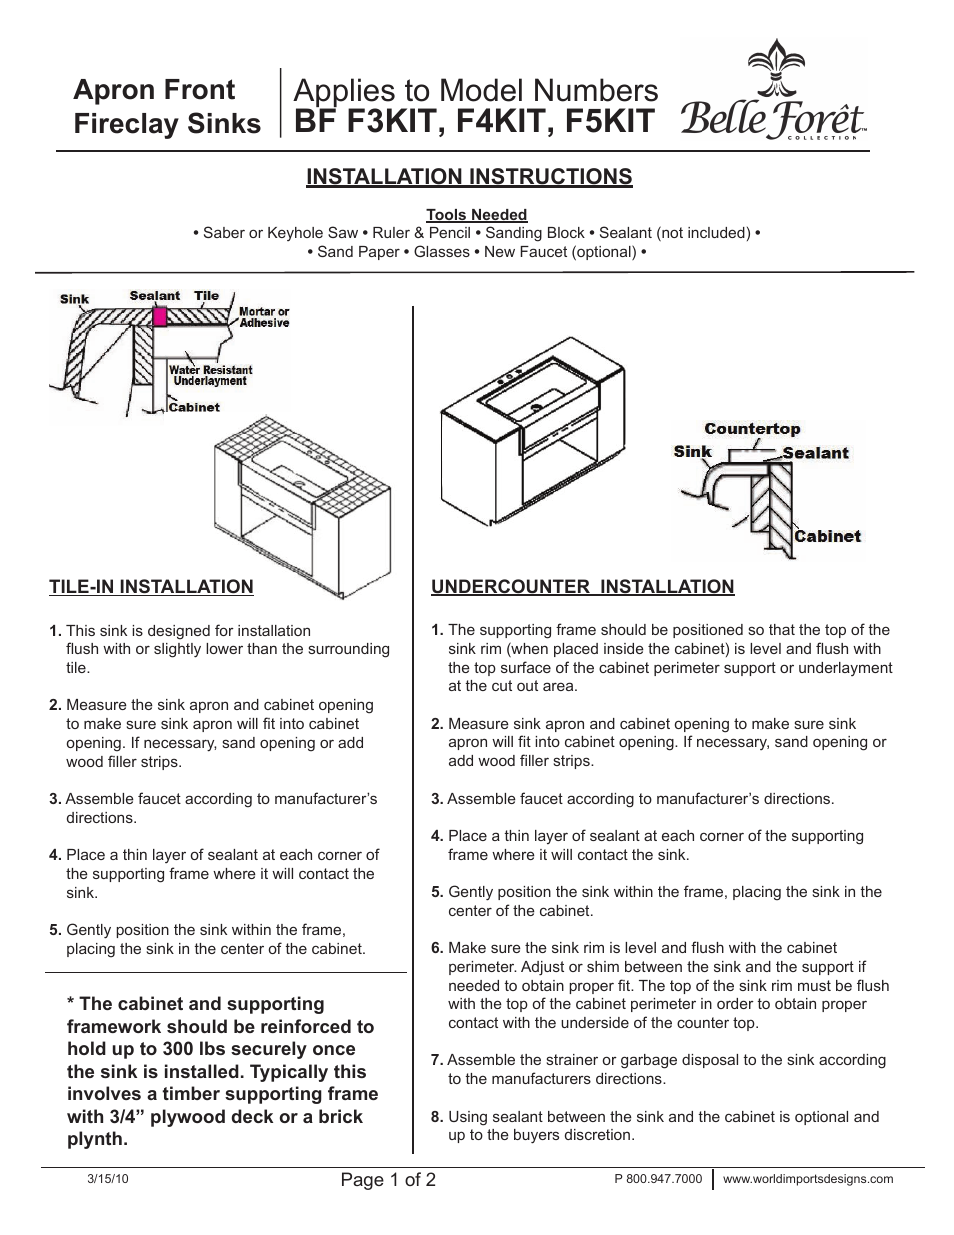 Factory Direct Hardware Belle Foret F4kit 29 User Manual 2